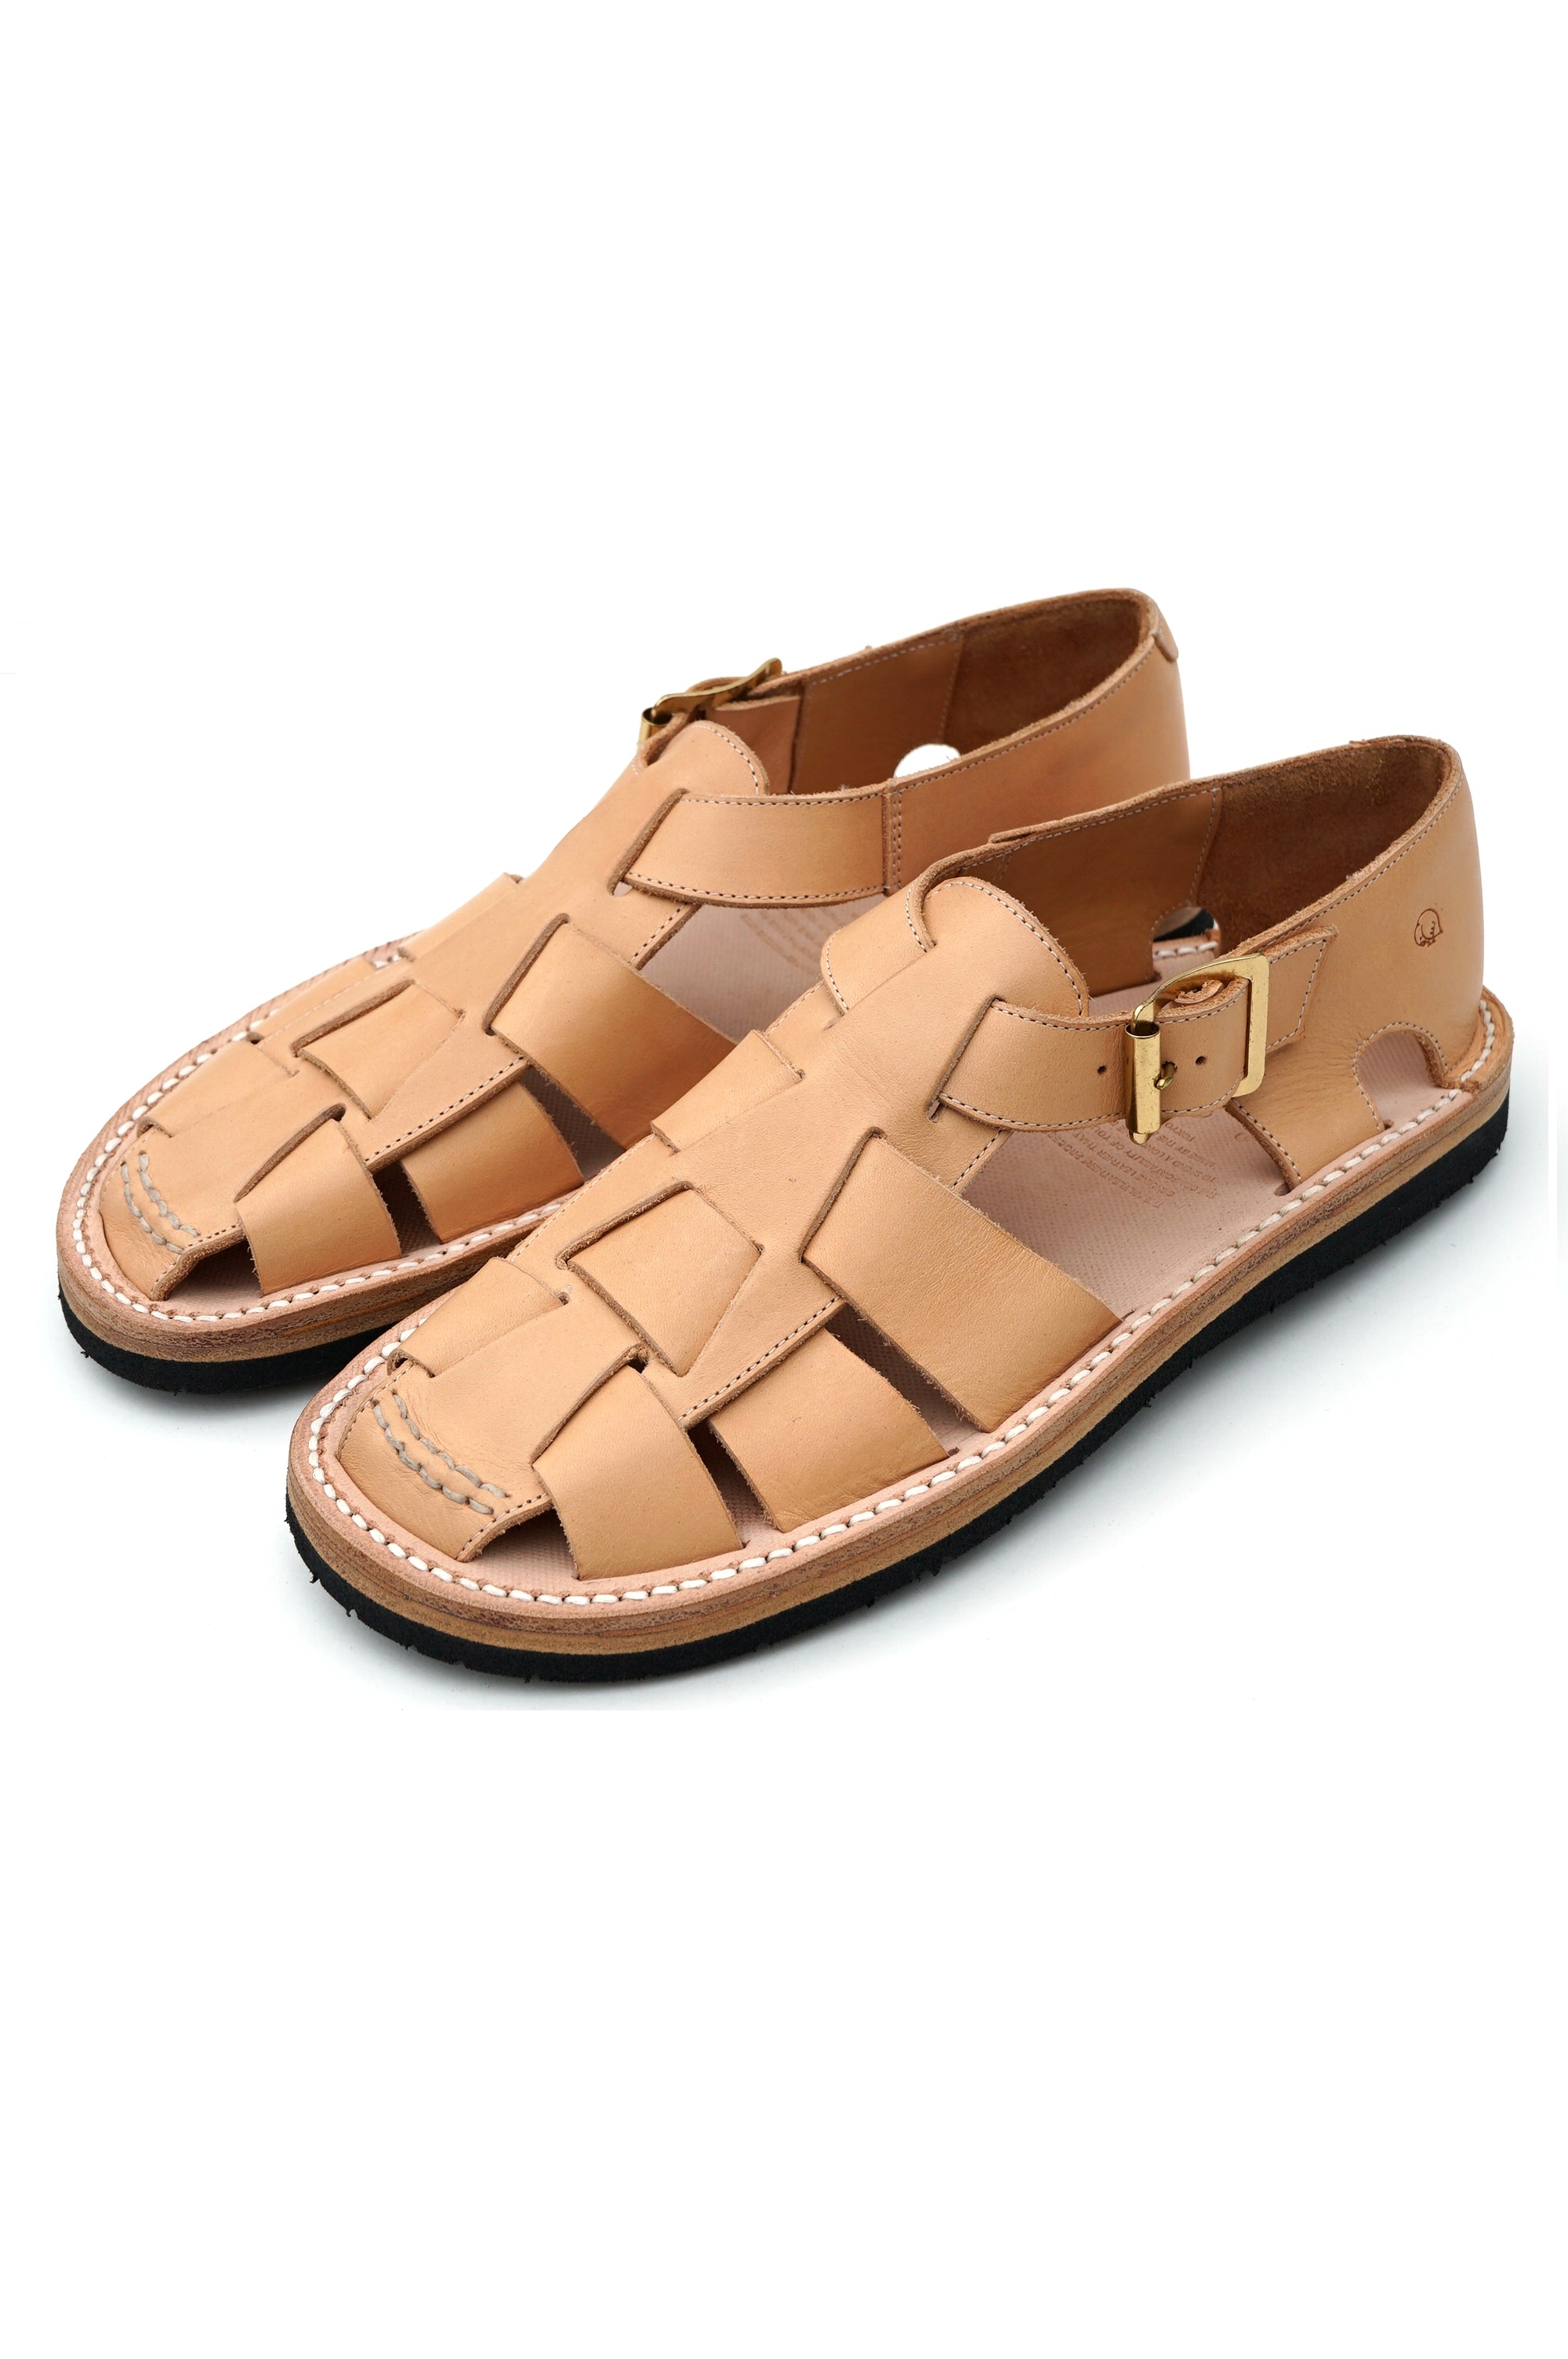 Tokyo Sandals(トーキョーサンダル) “GURKA SANDAL” #TS-C15 / TAN